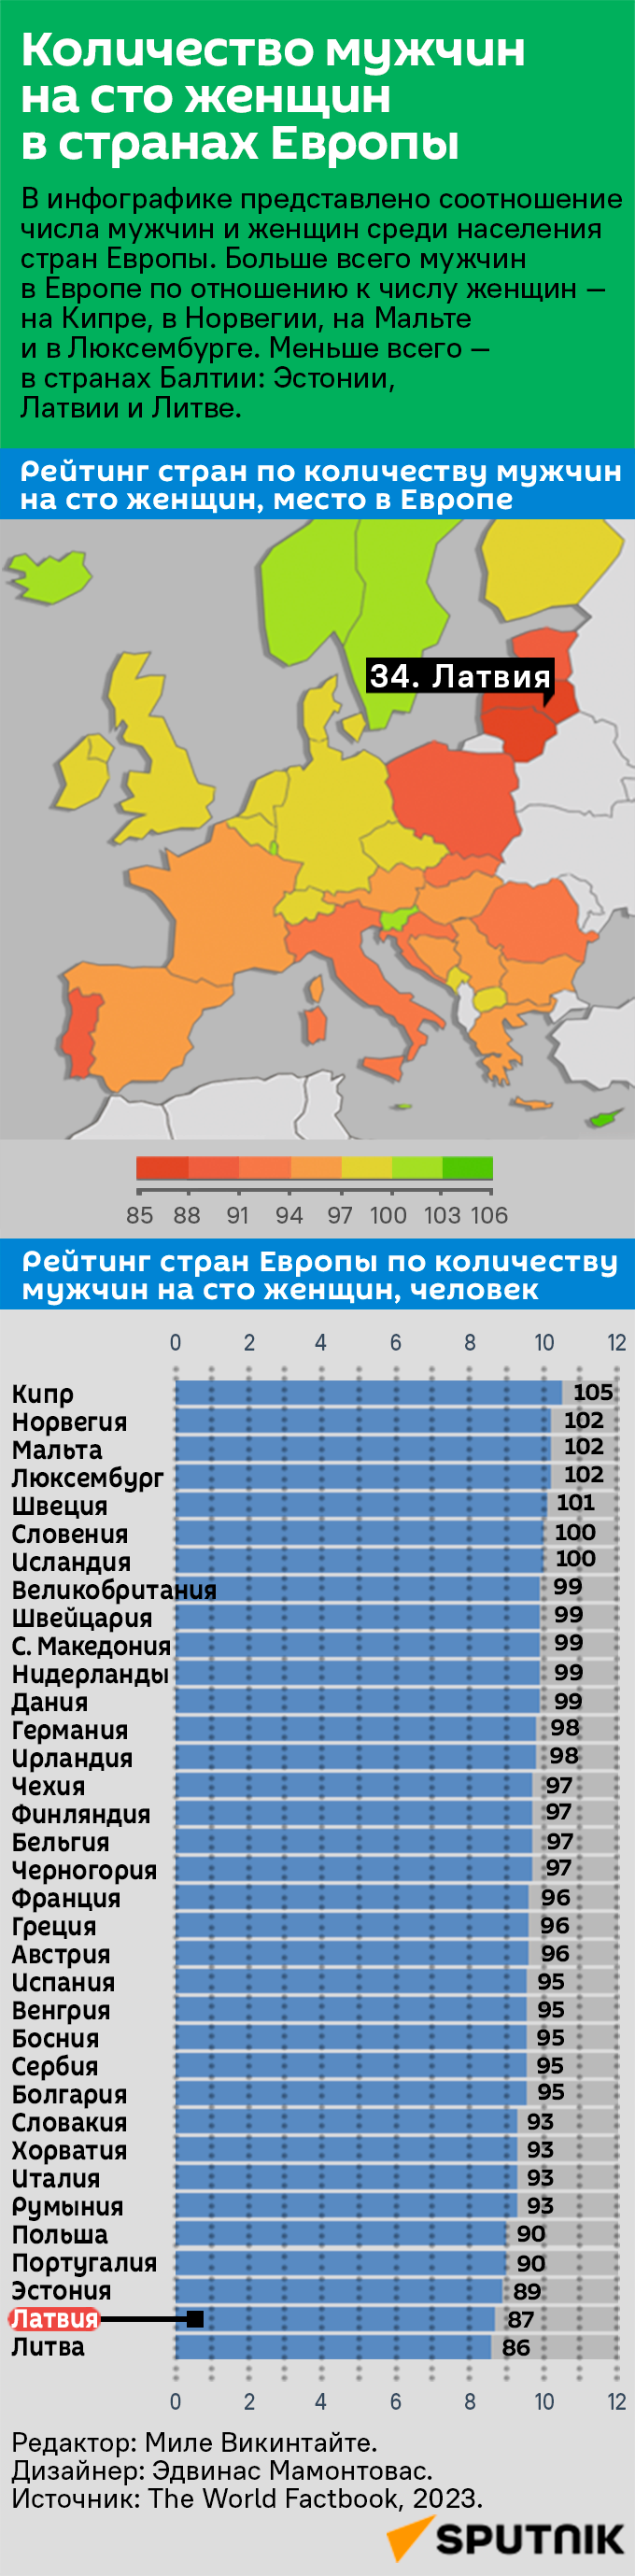 Количество мужчин на сто женщин в странах Европы  - Sputnik Латвия